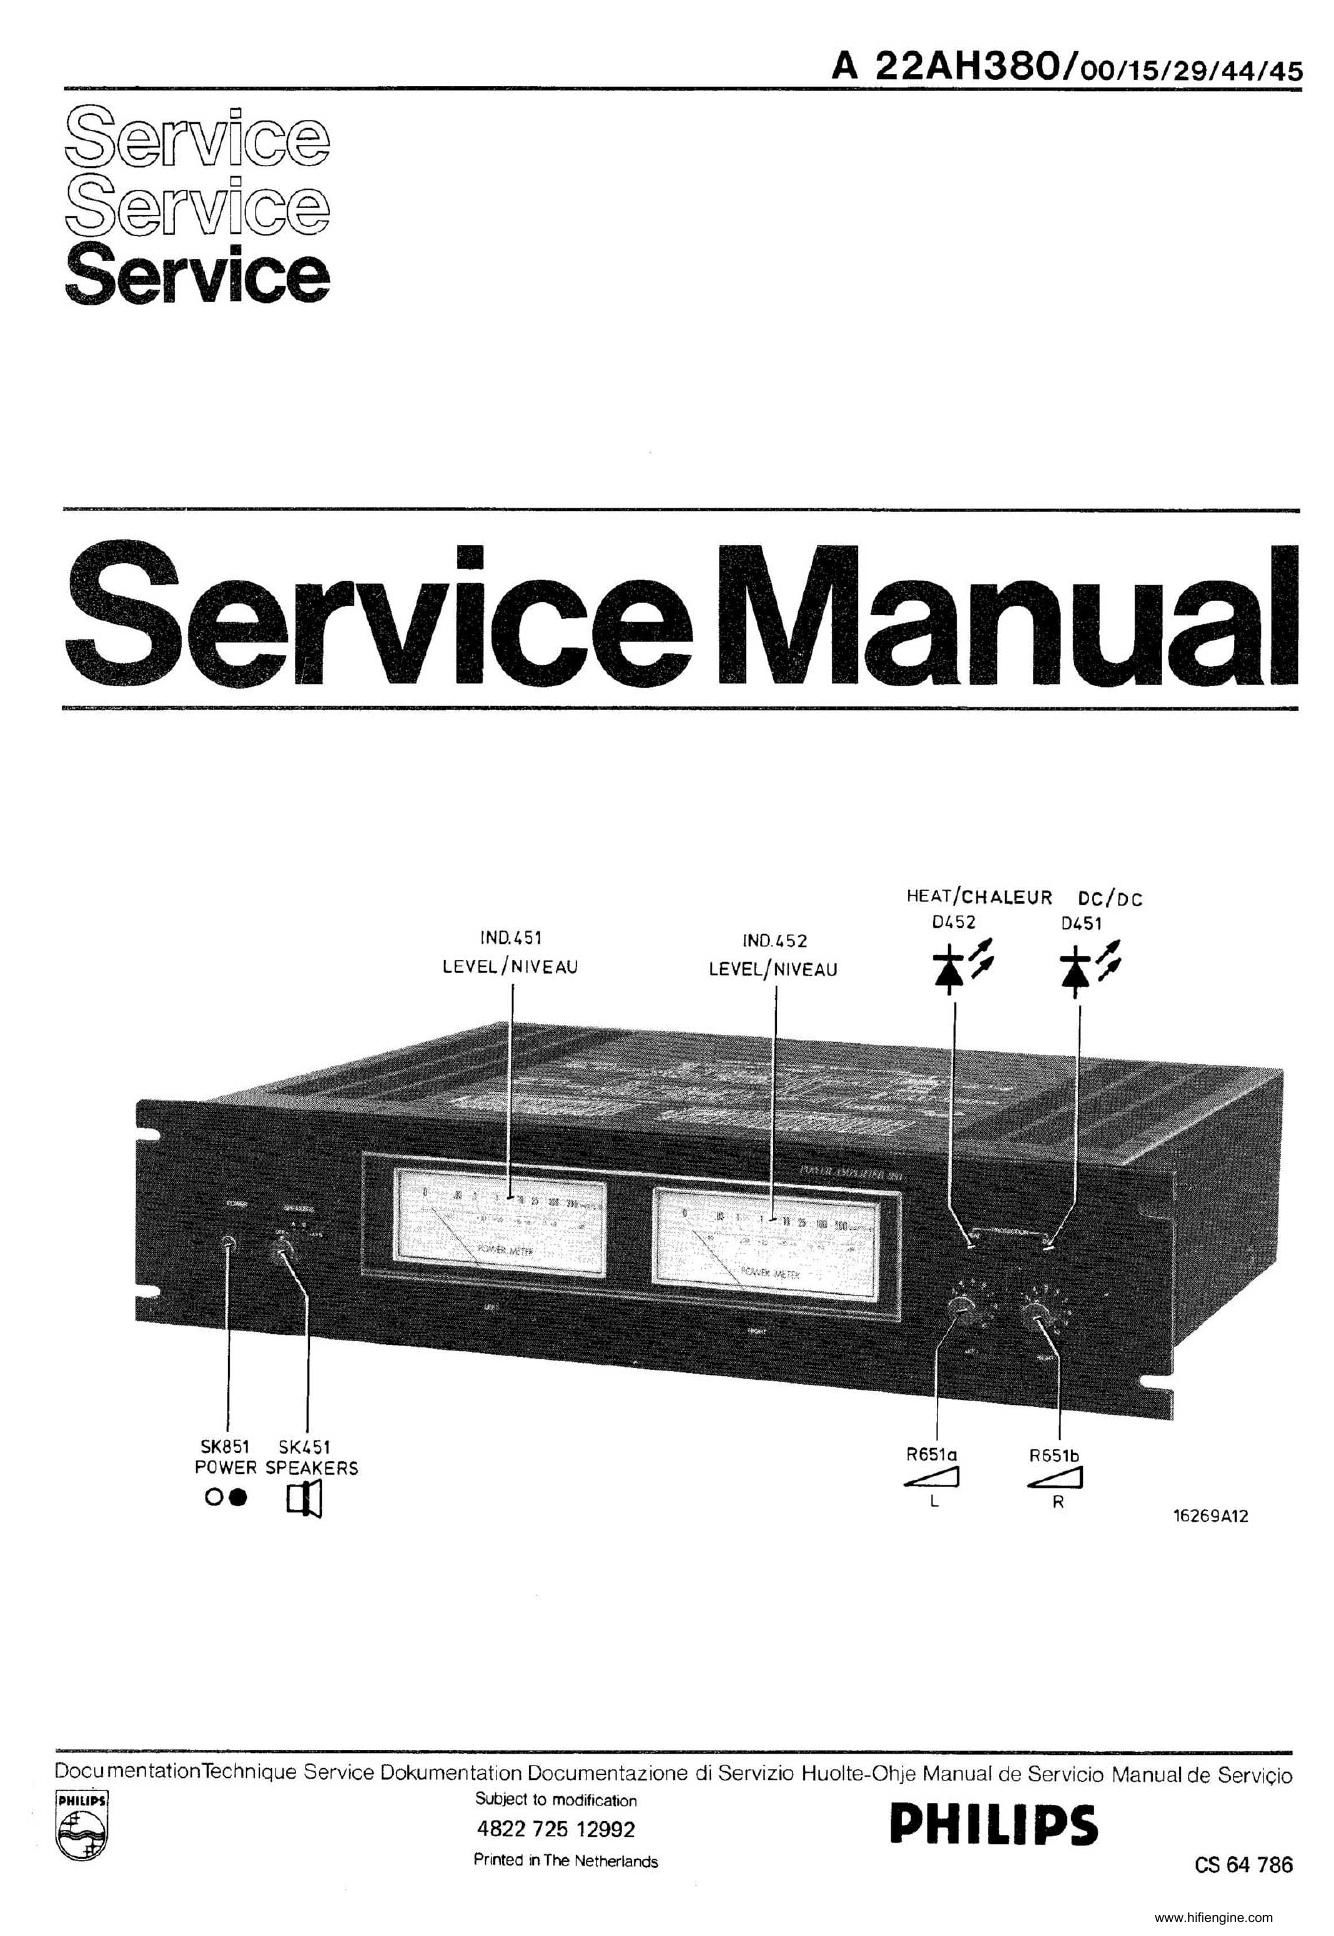 philips ah 380 service manual